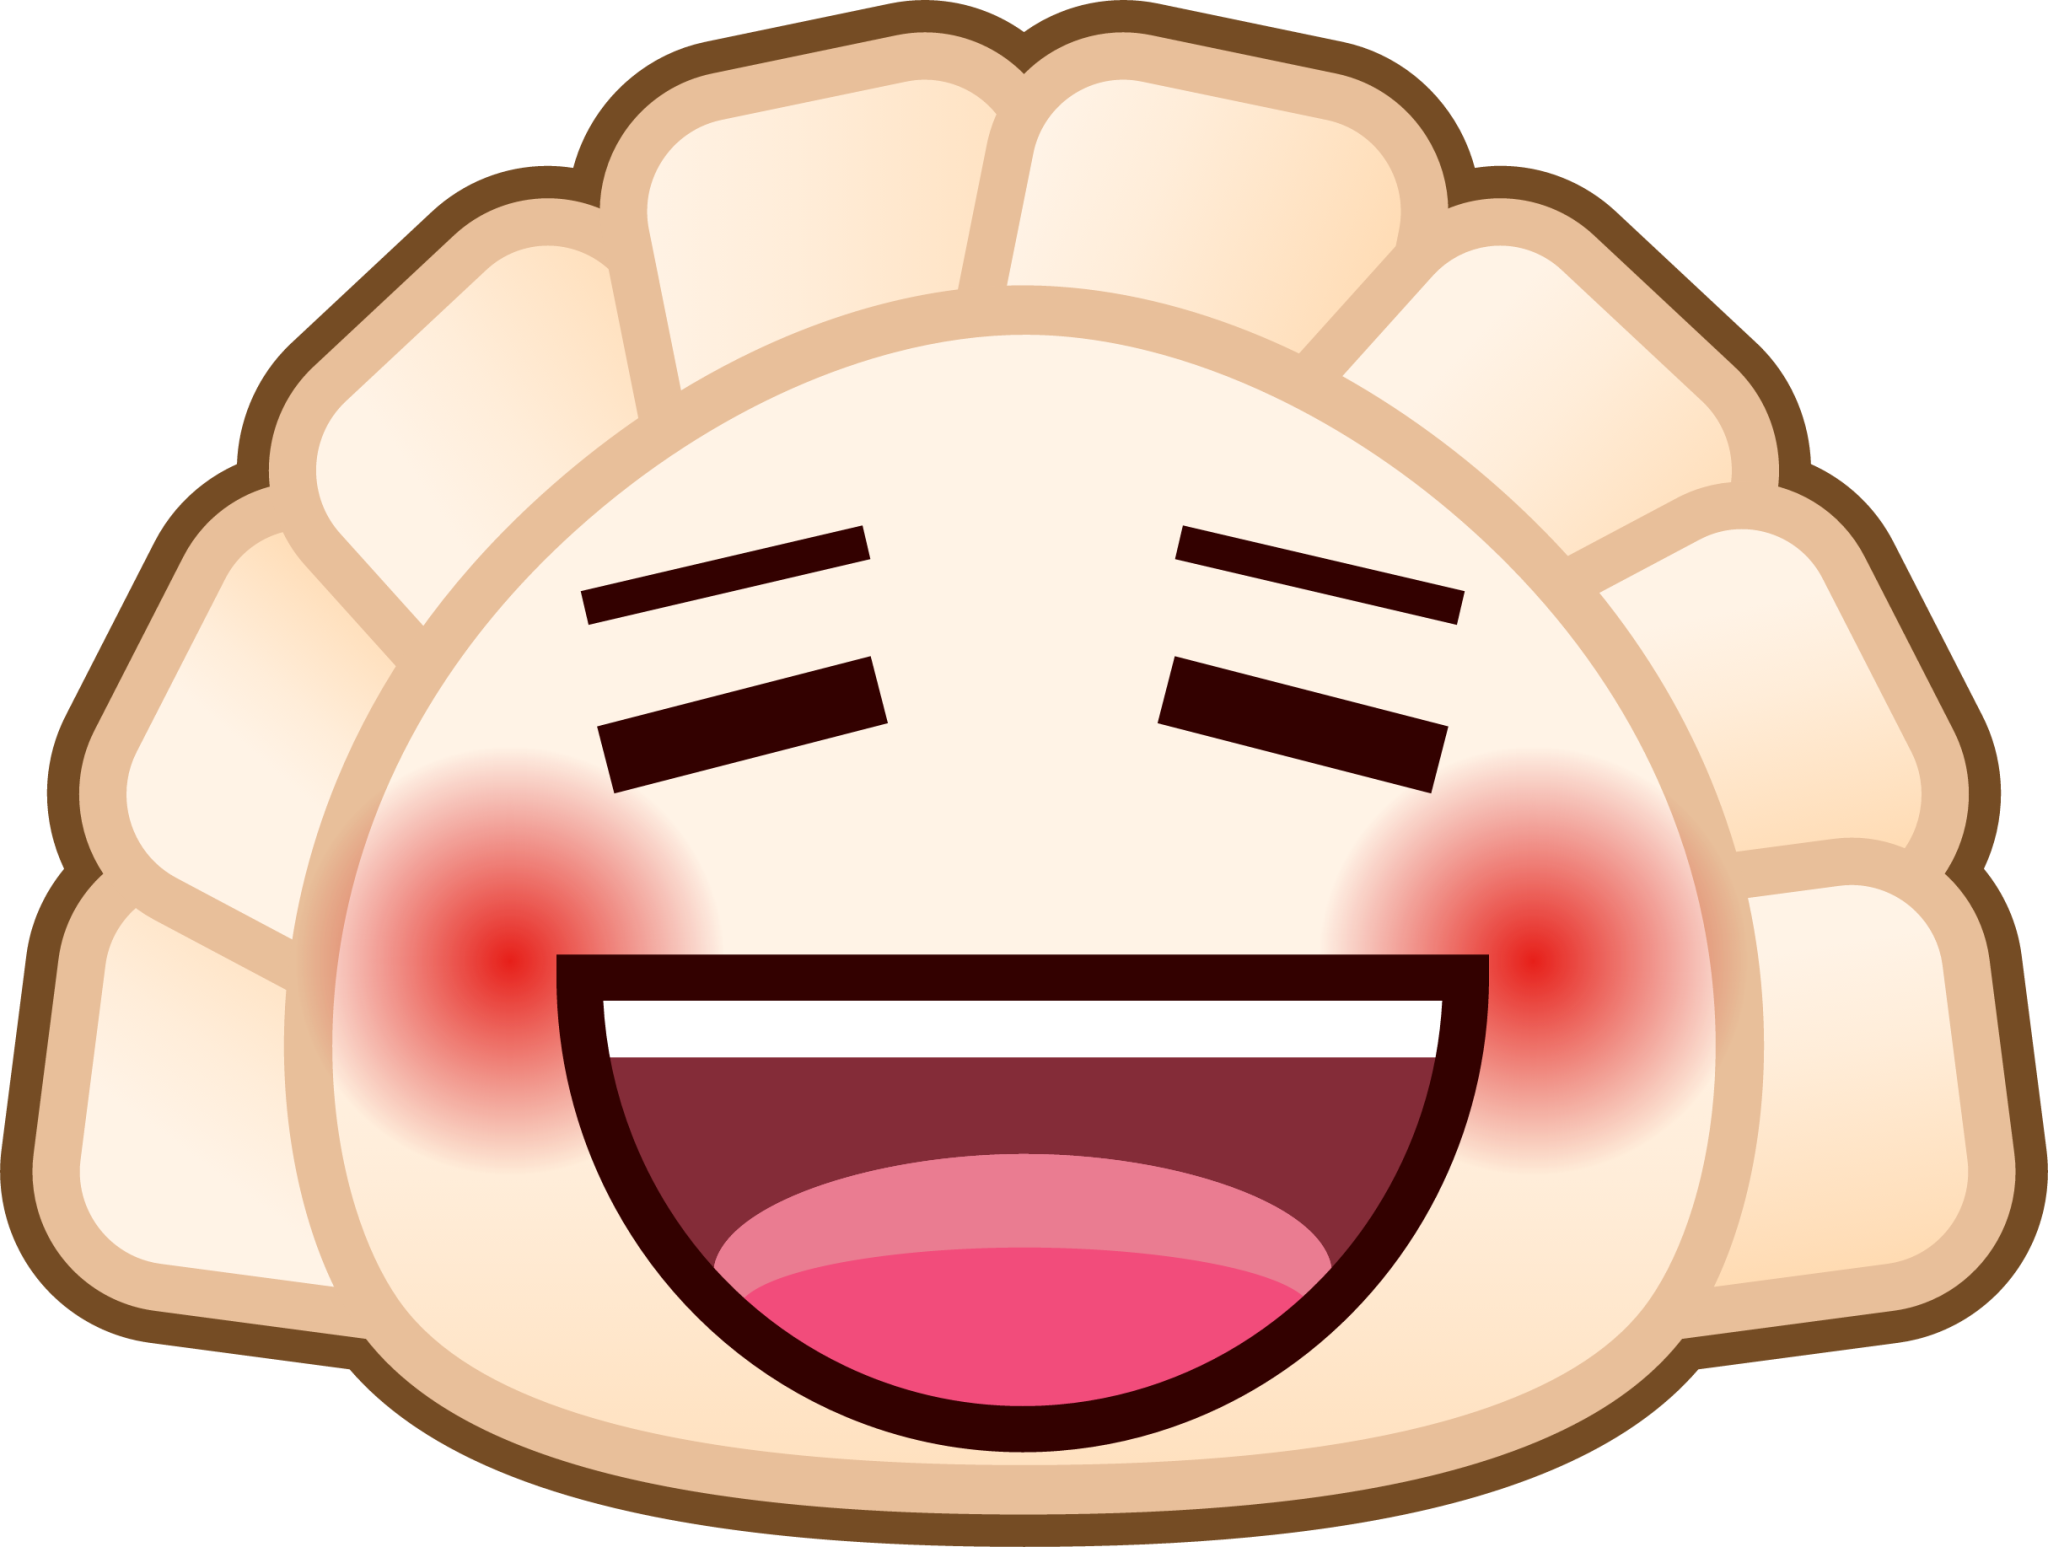 smiling face (dumpling) emoji